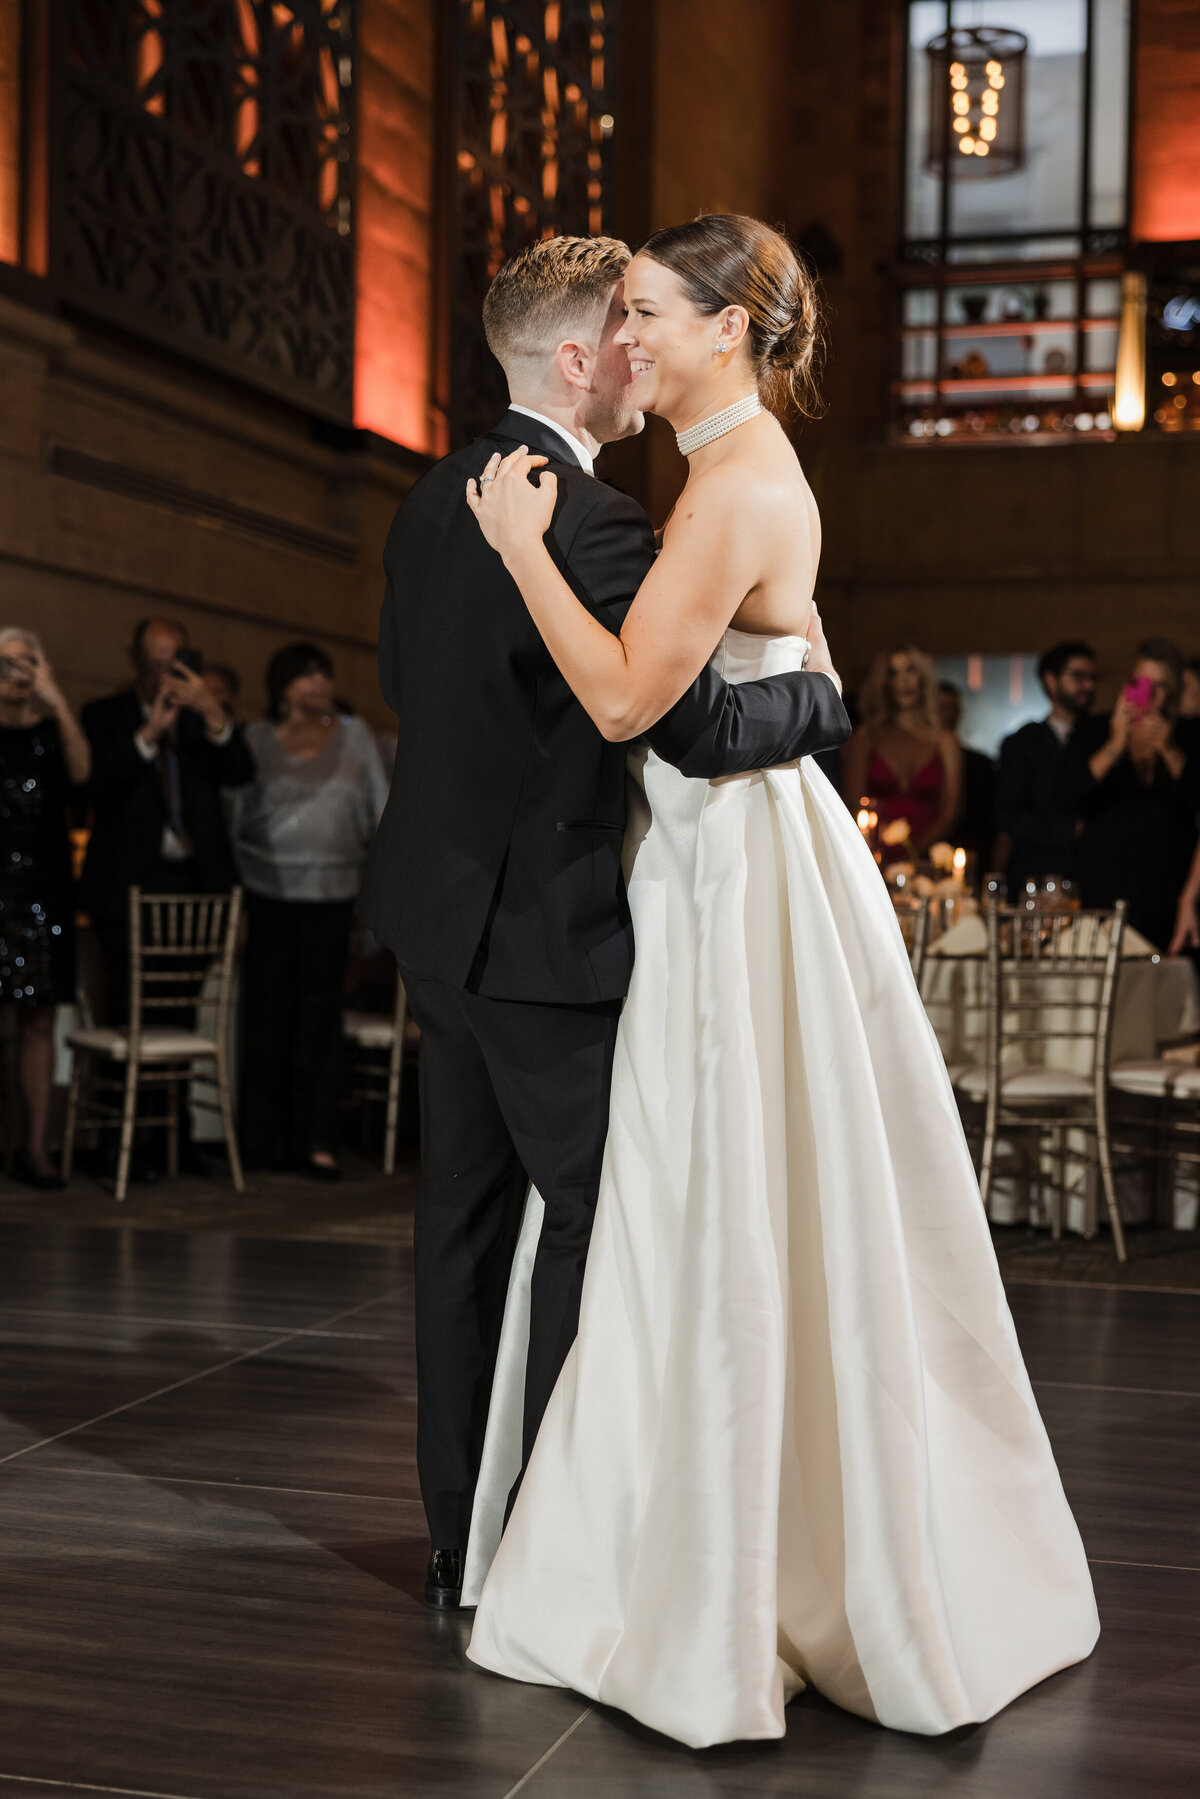 union-trust-wedding-philadelphia-photos-135